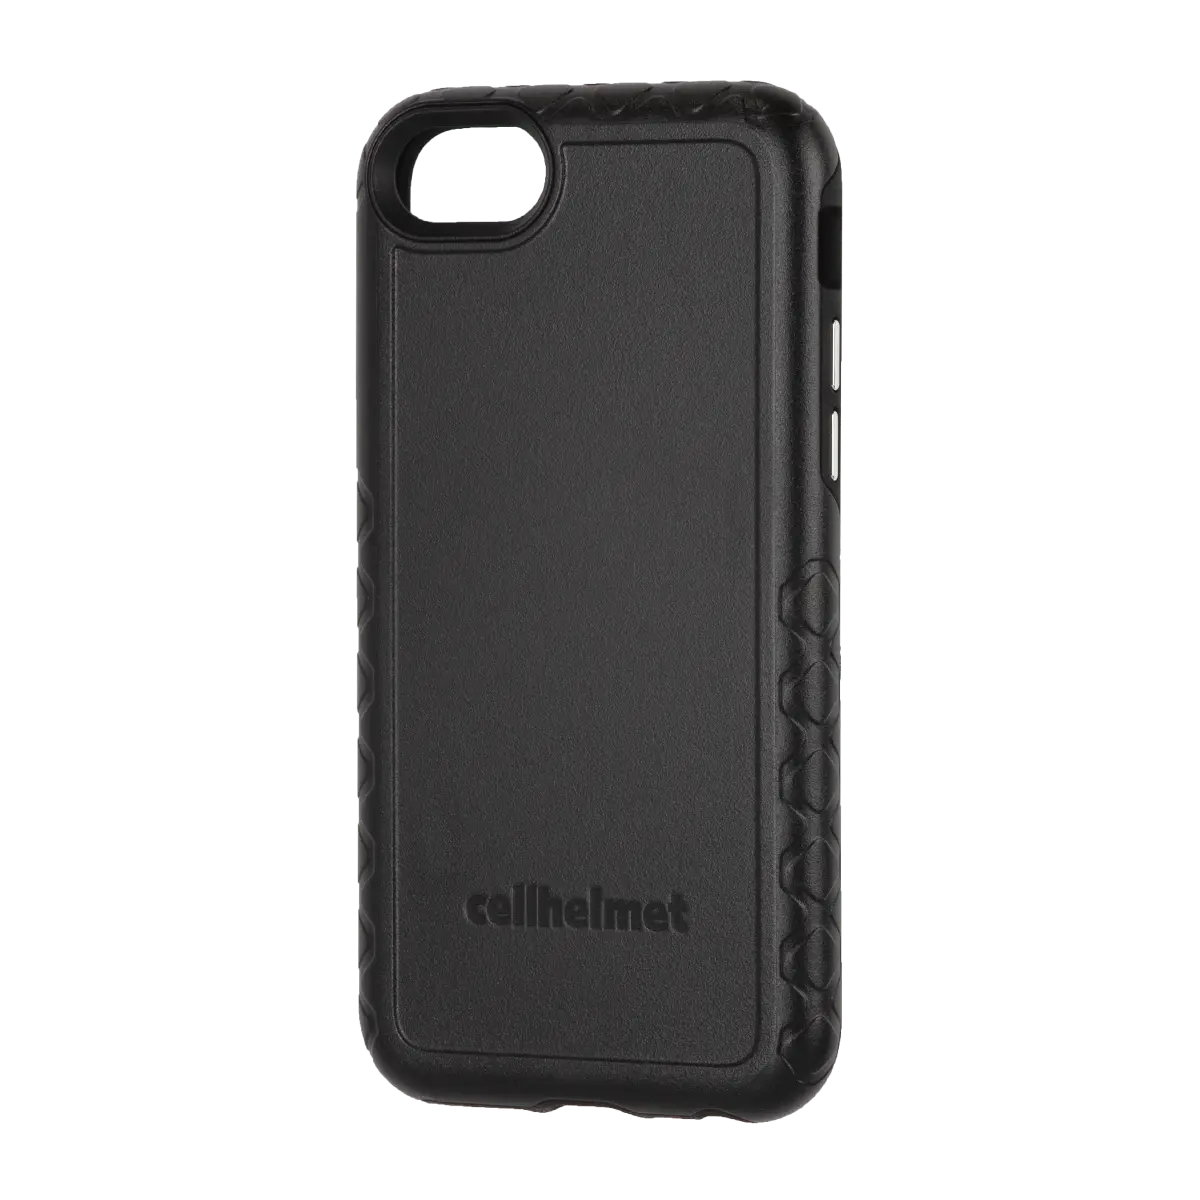 Black cellhelmet Custom Printed Case for iPhone SE 2020